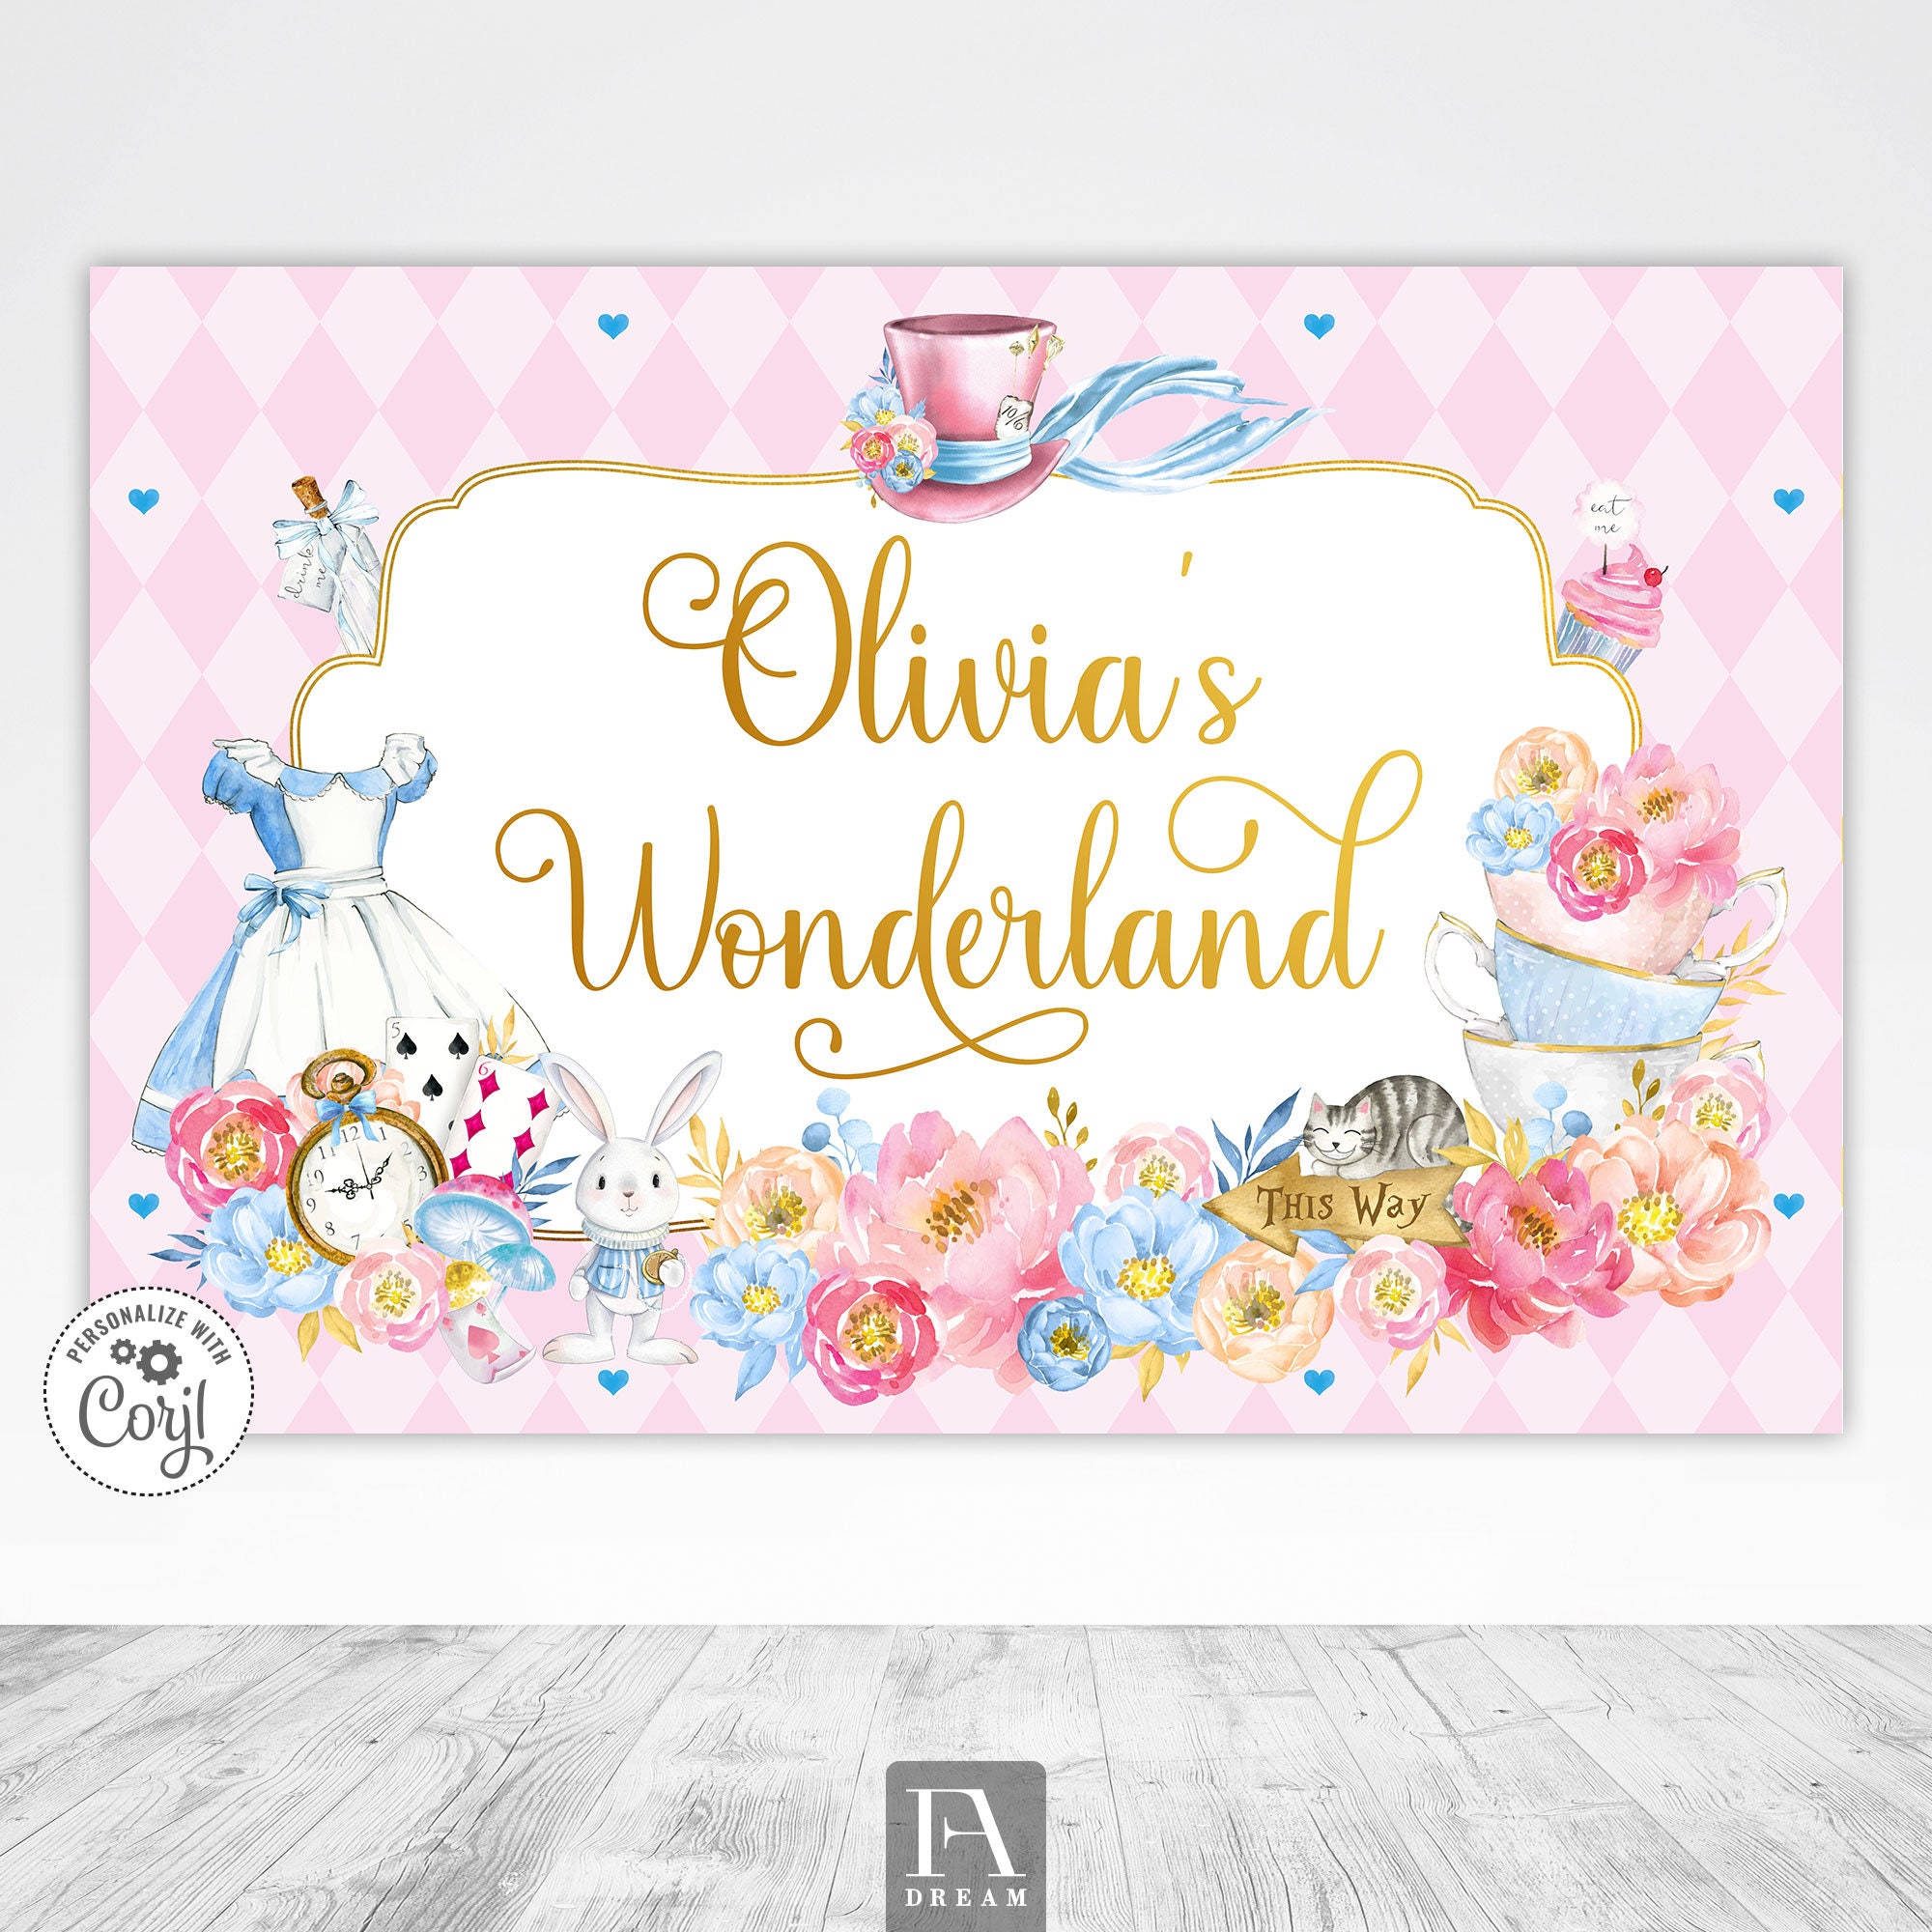 Alice in Wonderland Decorations, Alice in Wonderland Invitation, Alice in Wonderland  Party, Photo Booth Props, Alice in Wonderland Printable 